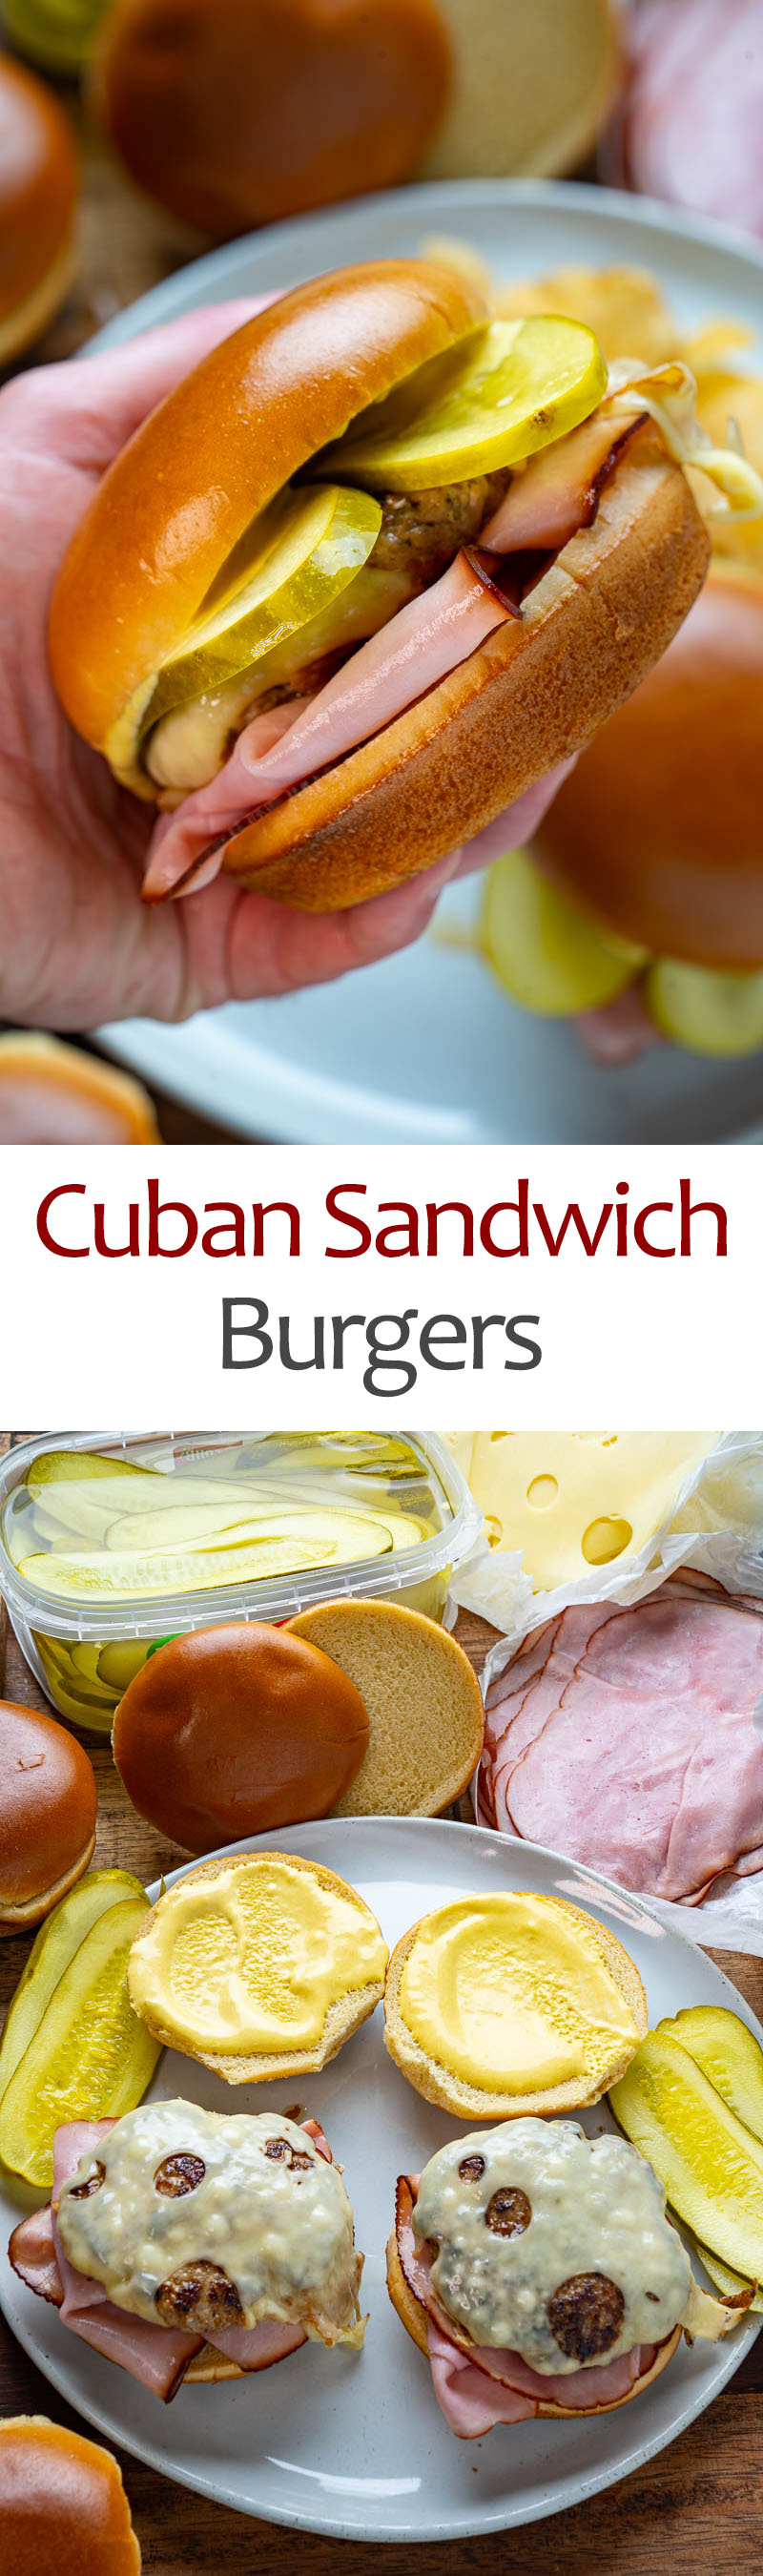 Cuban Sandwich Burgers